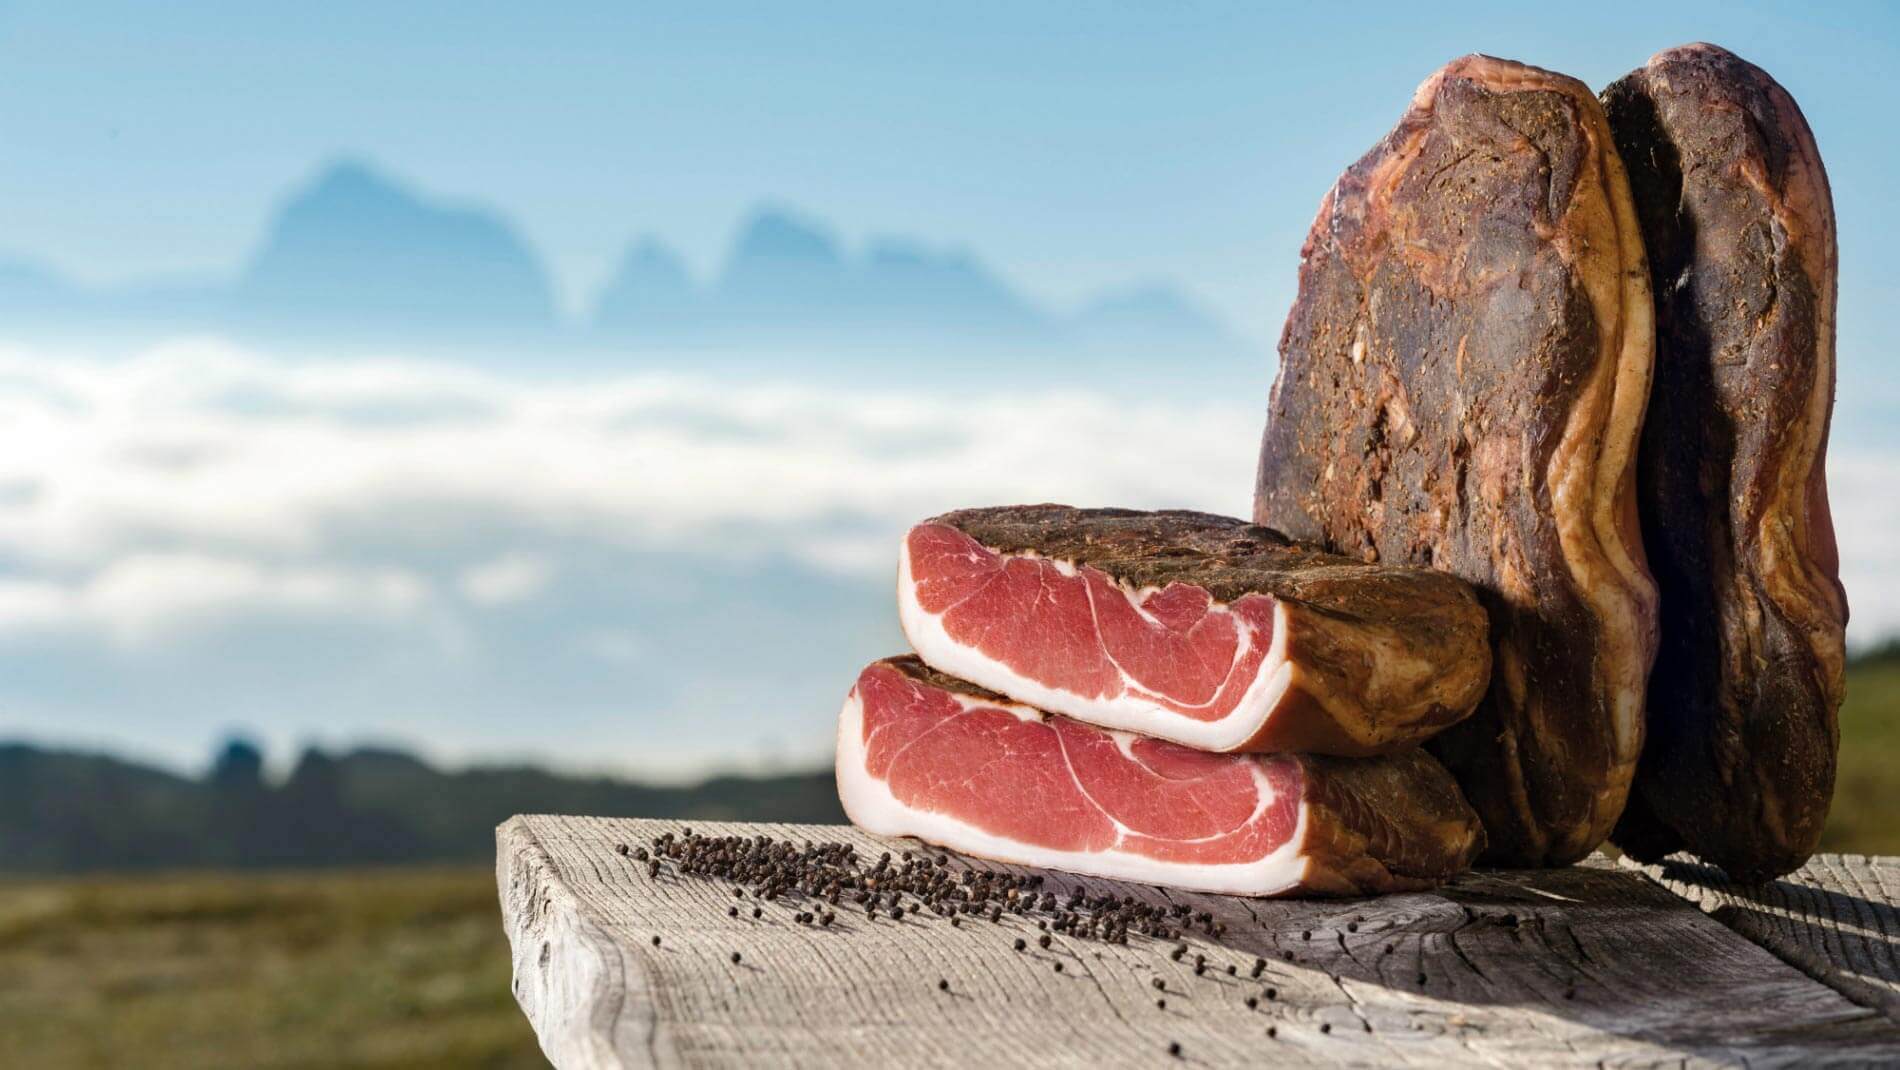 Speck Alto Adige PGI – Original South Tyrolean Speck / Bacon | Italiamo, ab 25.01.